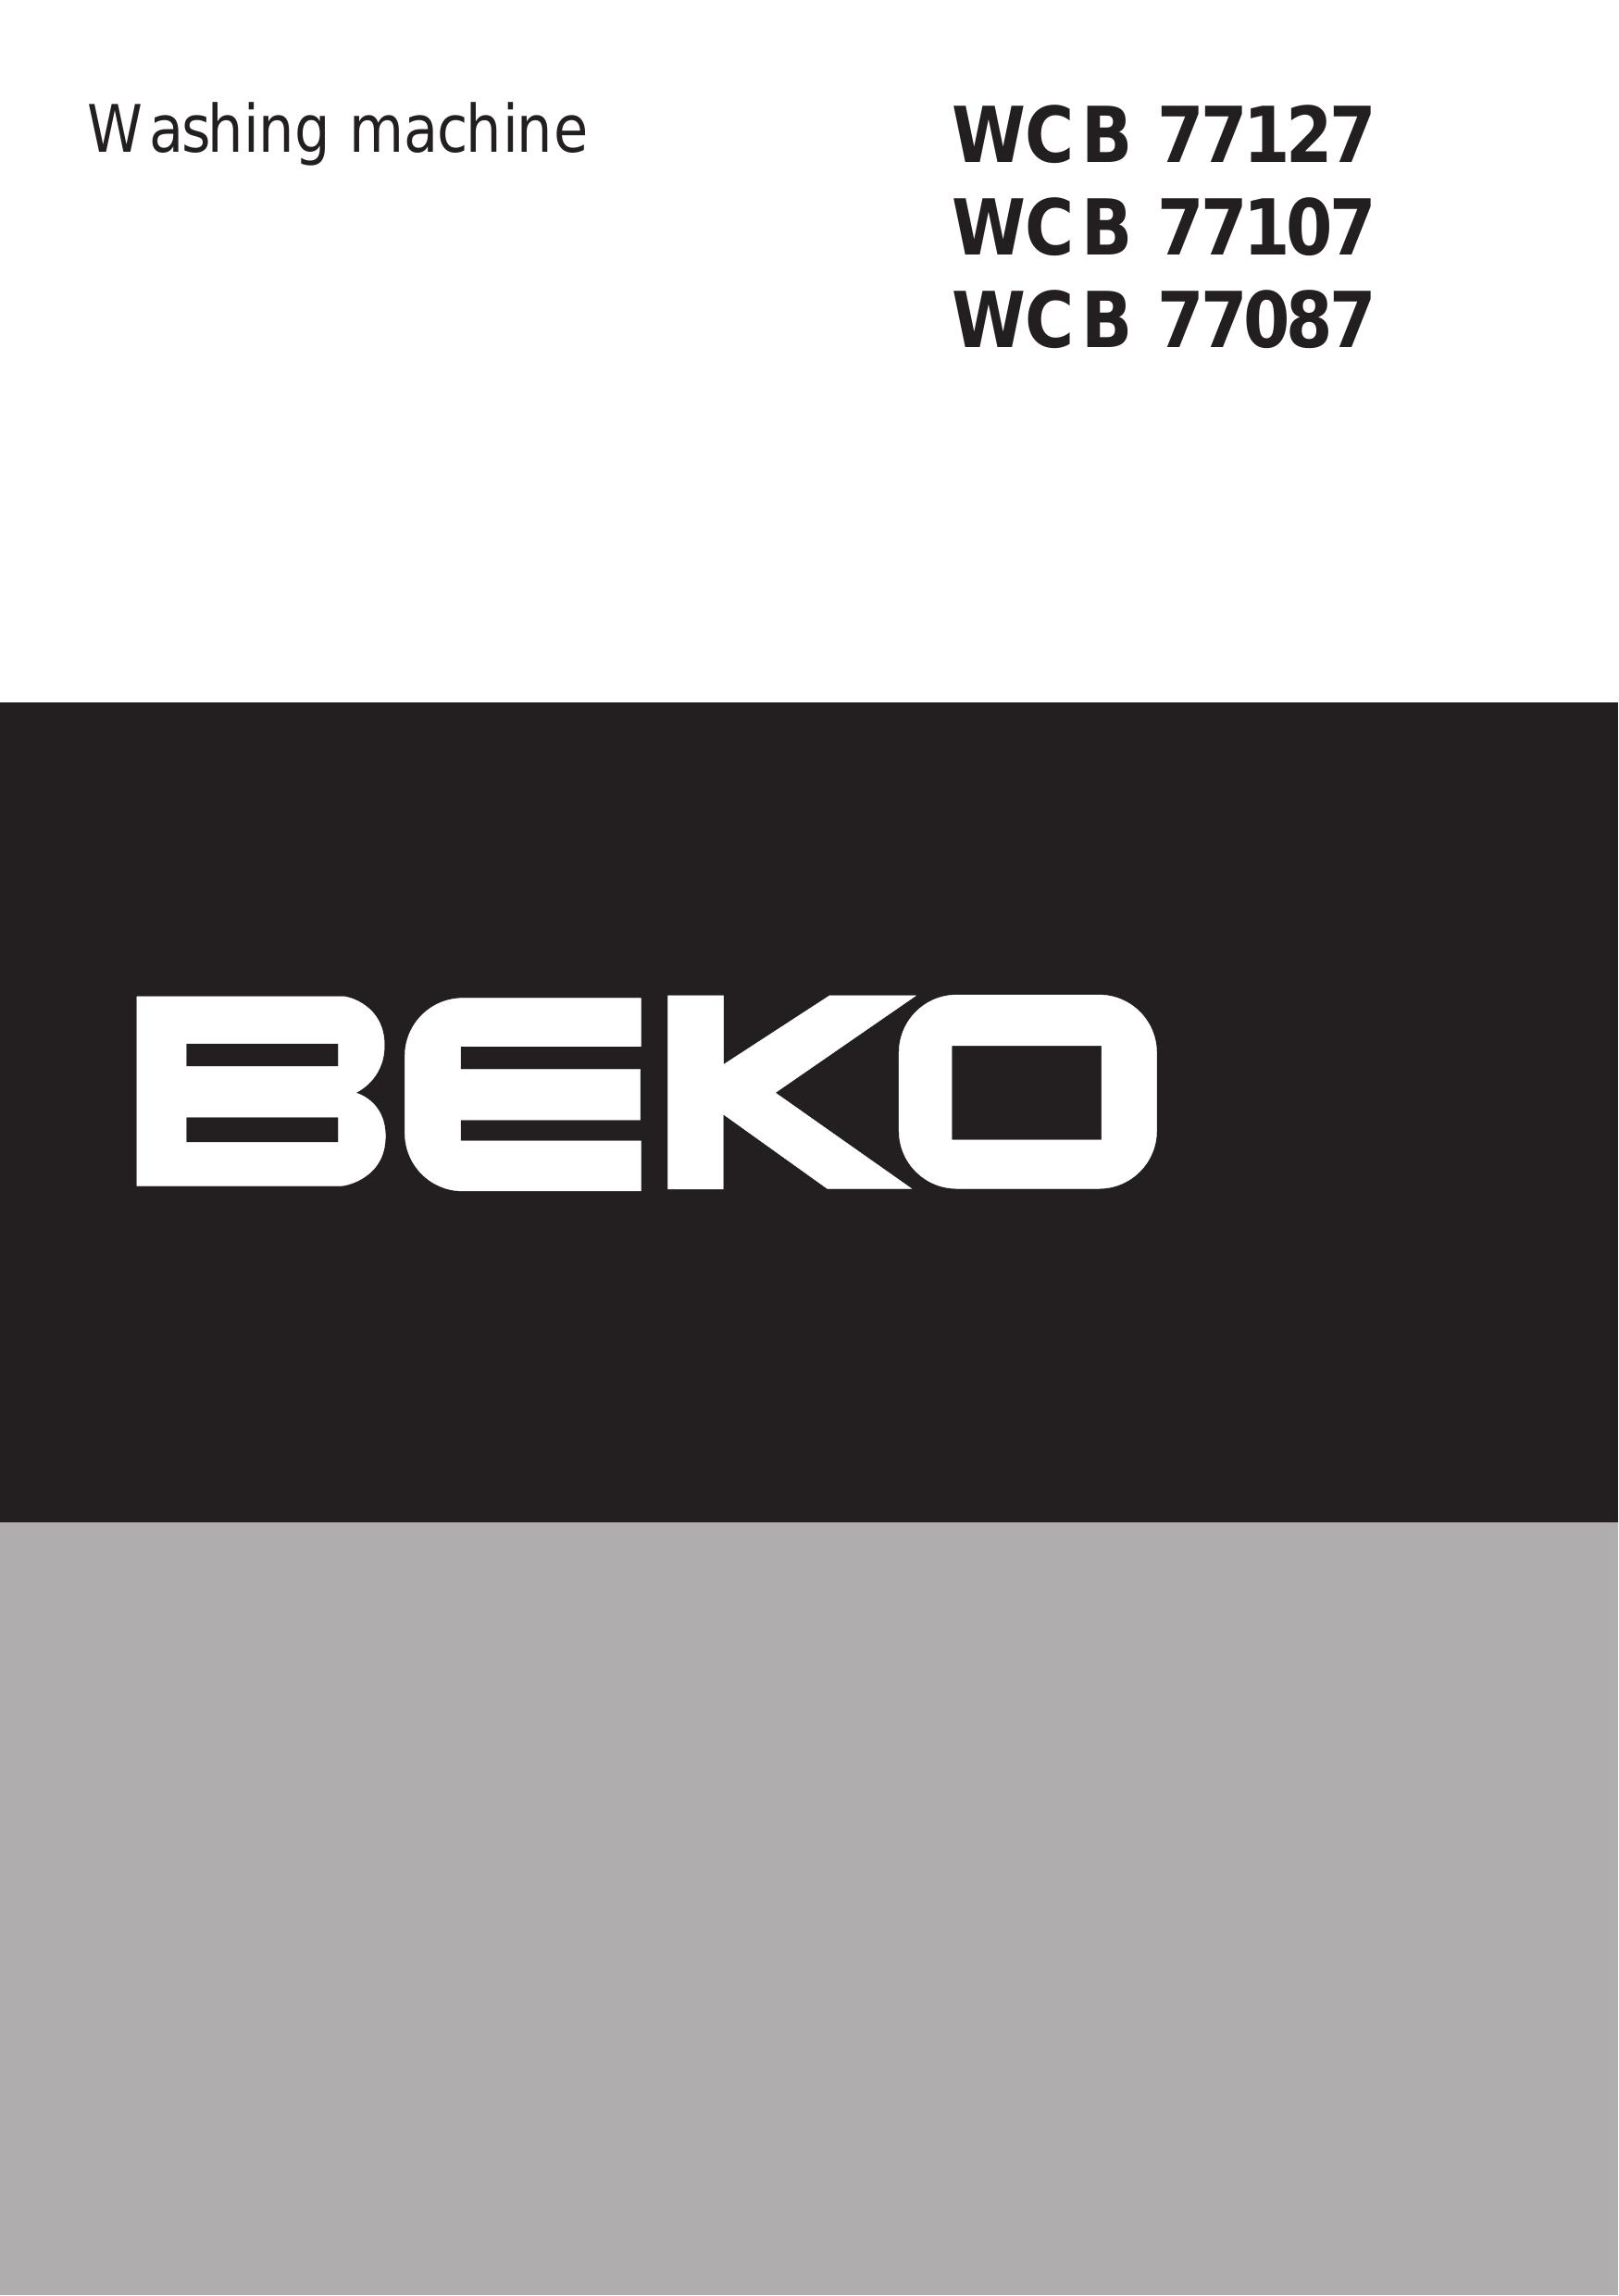 Beko WCB 77127 Washer/Dryer User Manual